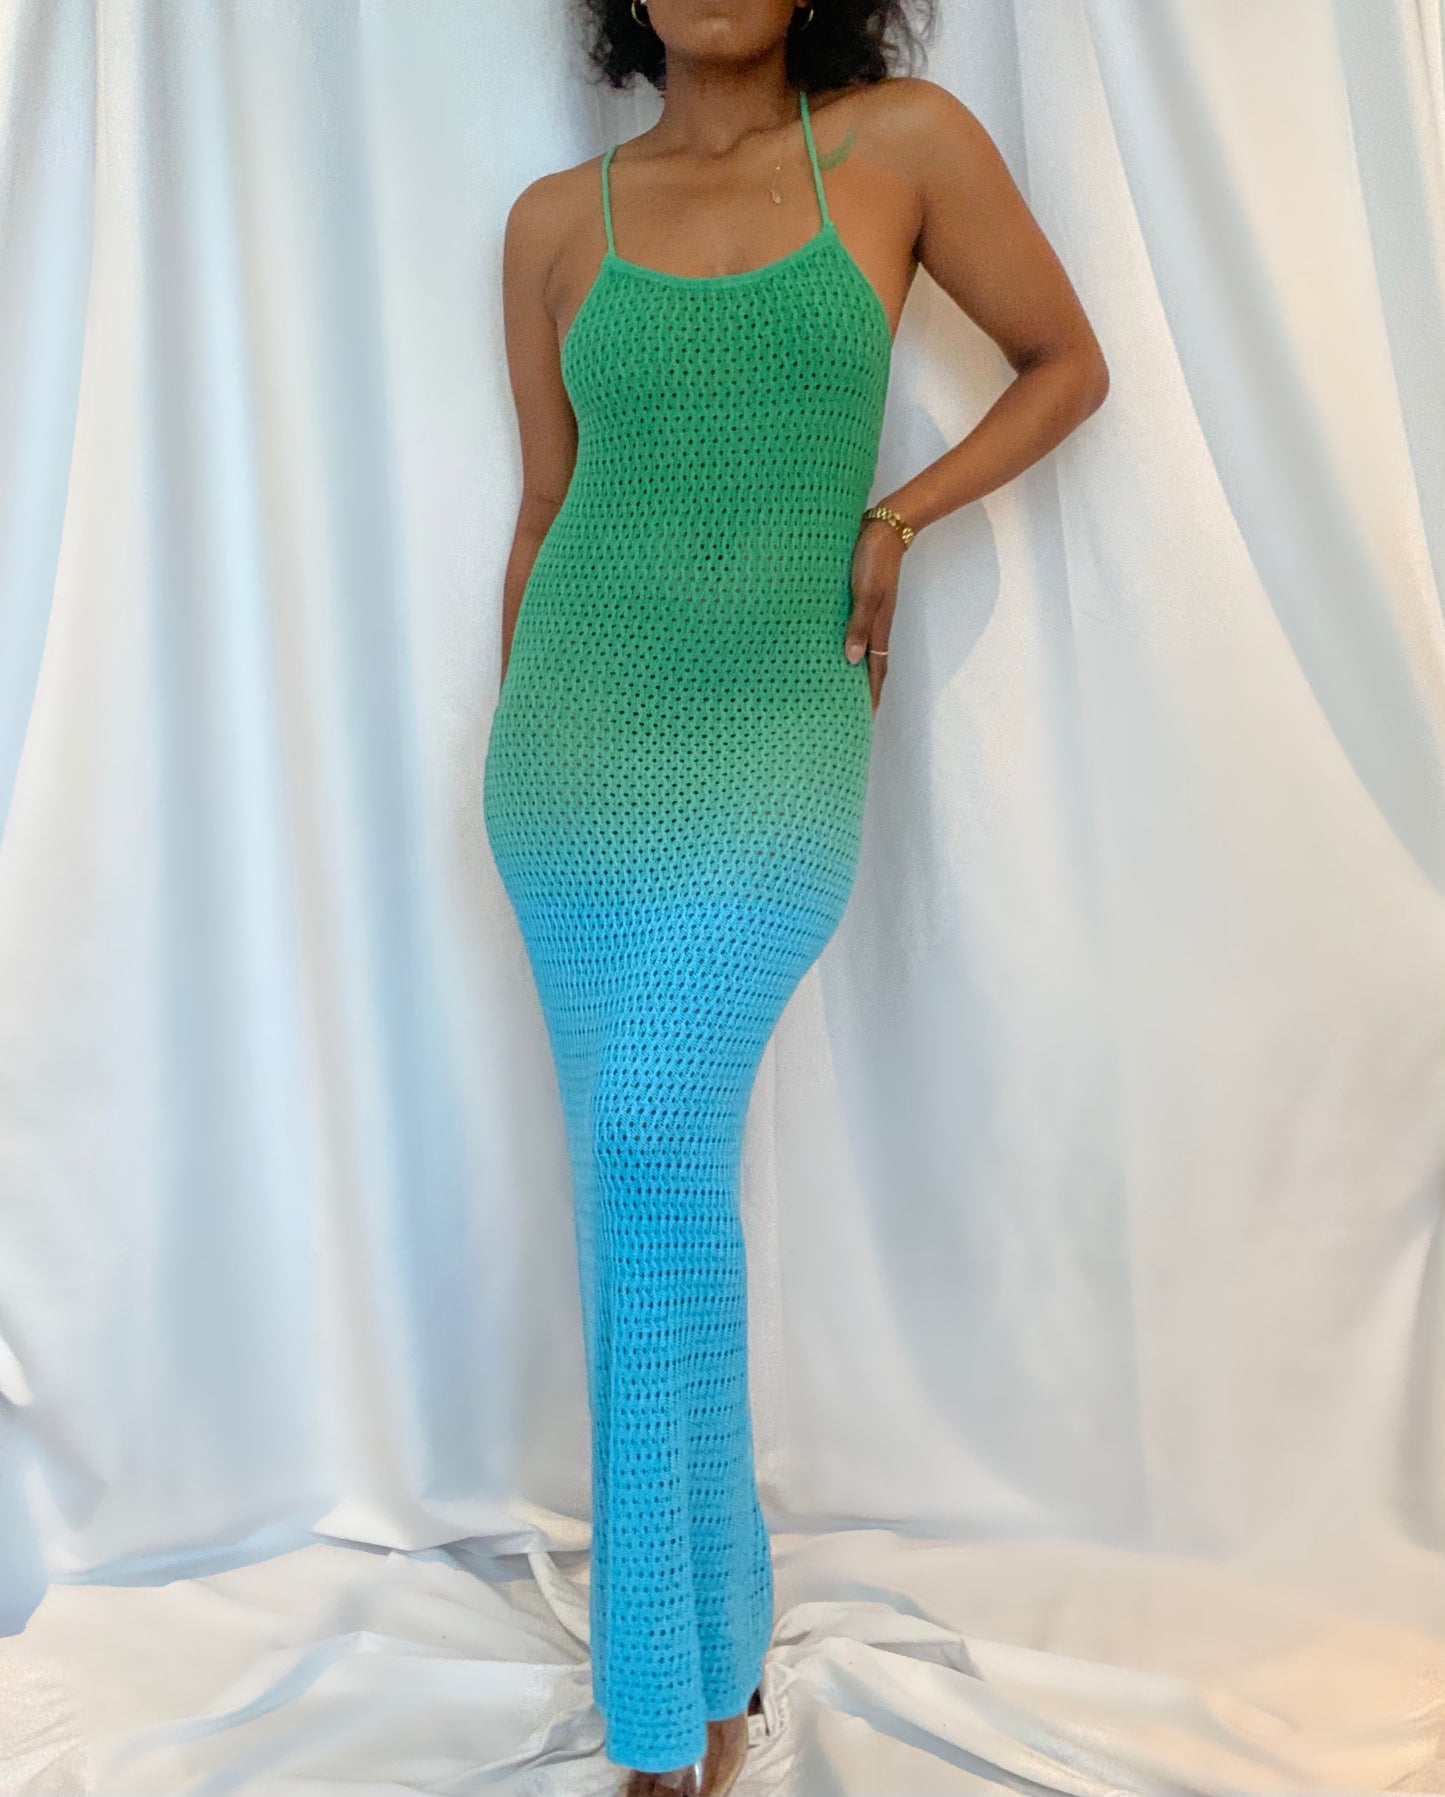 Ariel Ombré Mermaid Crochet Cover Up Dress